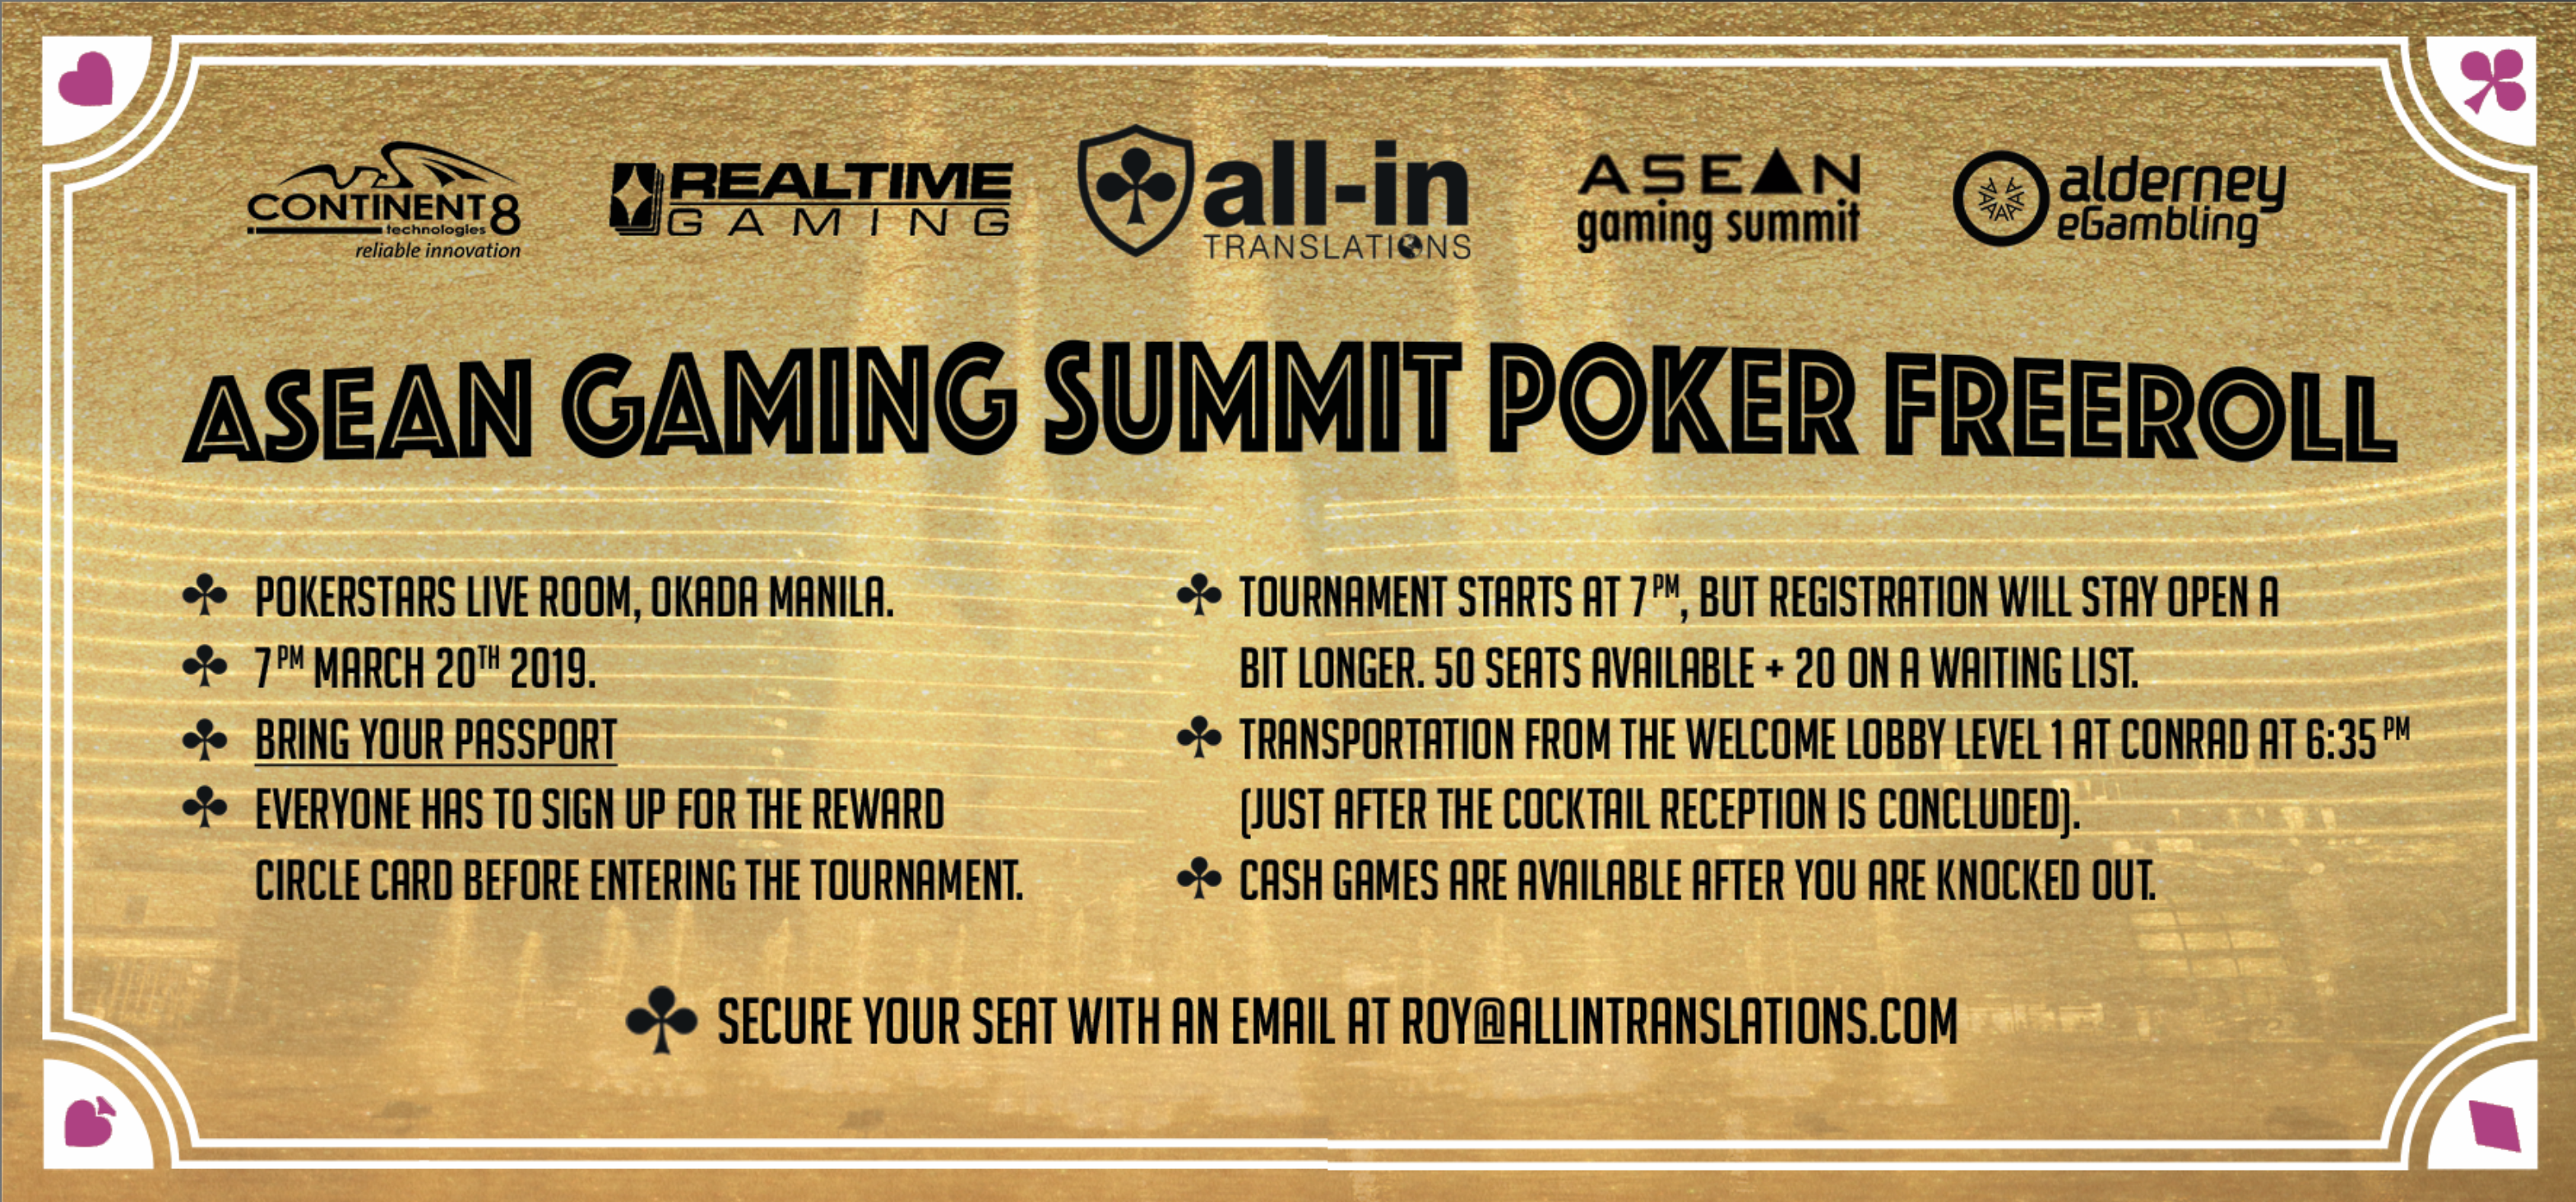 ASEAN Gaming Summit Poker Freeroll Ticket